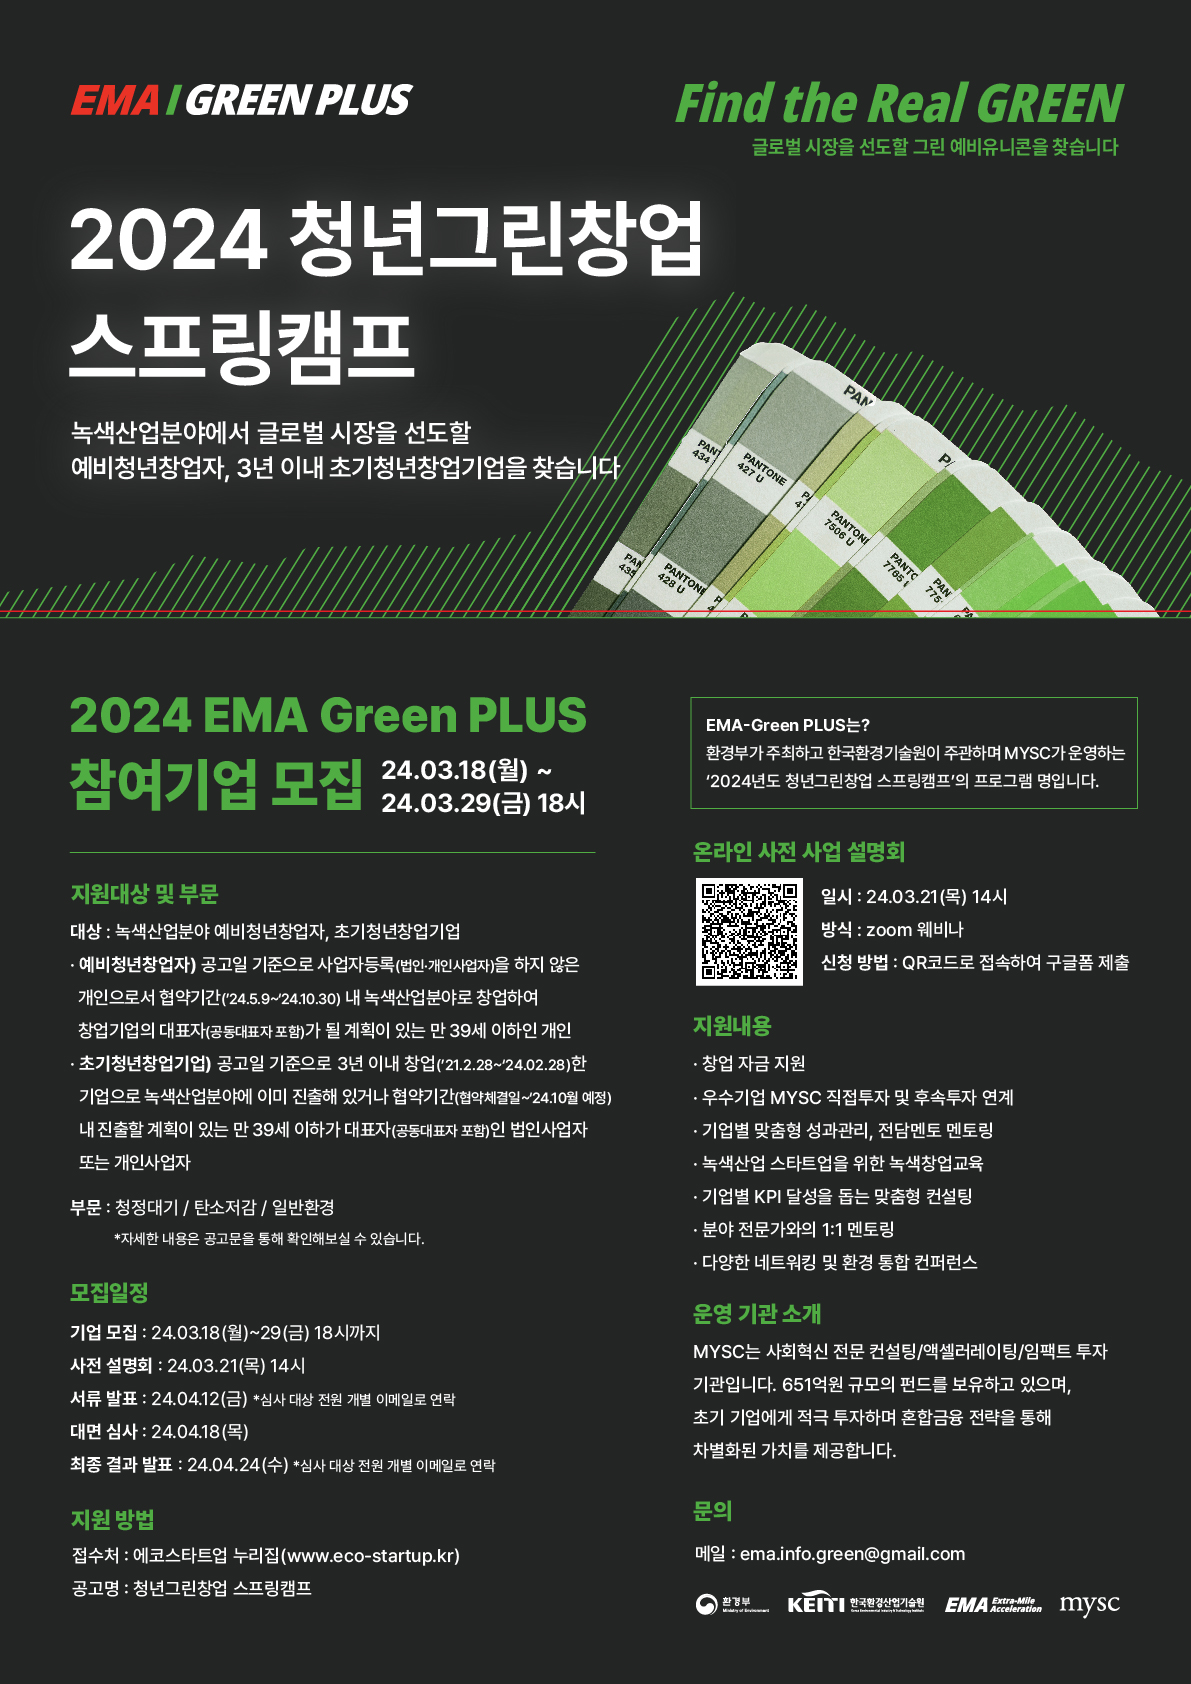 2024 EMA-Green PLUS 참여기업 모집